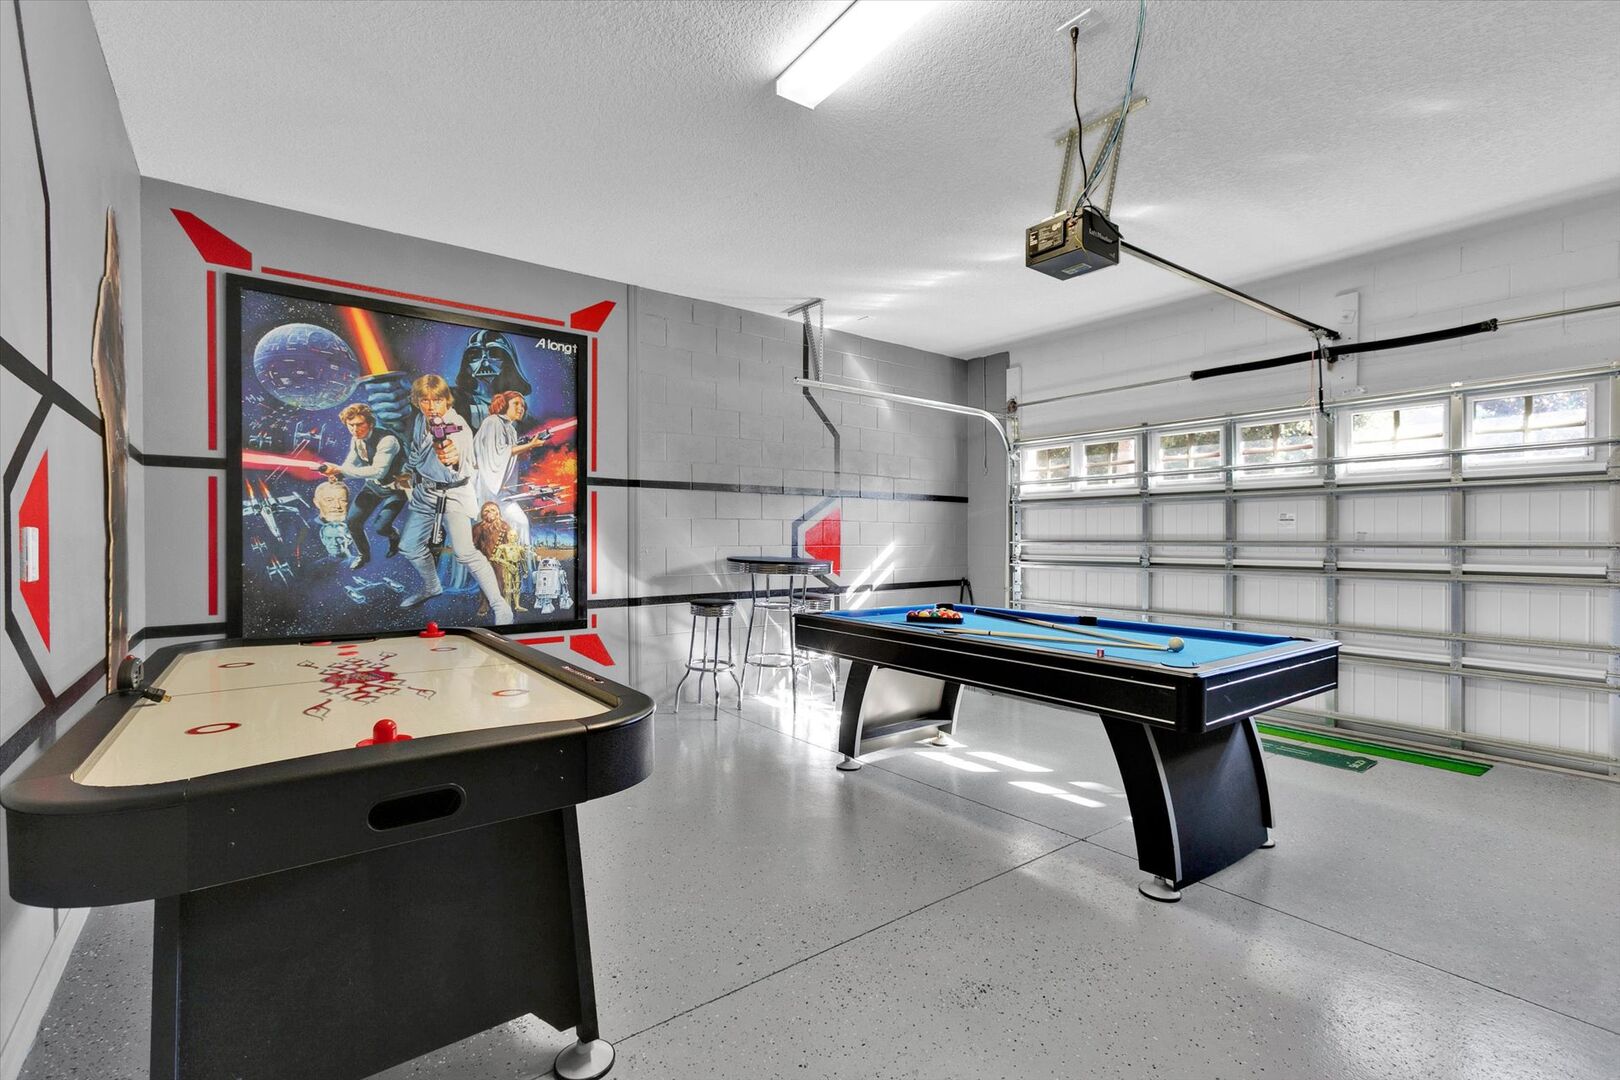 Game Room (Angle)
Pool Table
Video Arcade 
Air Hockey
Has AC